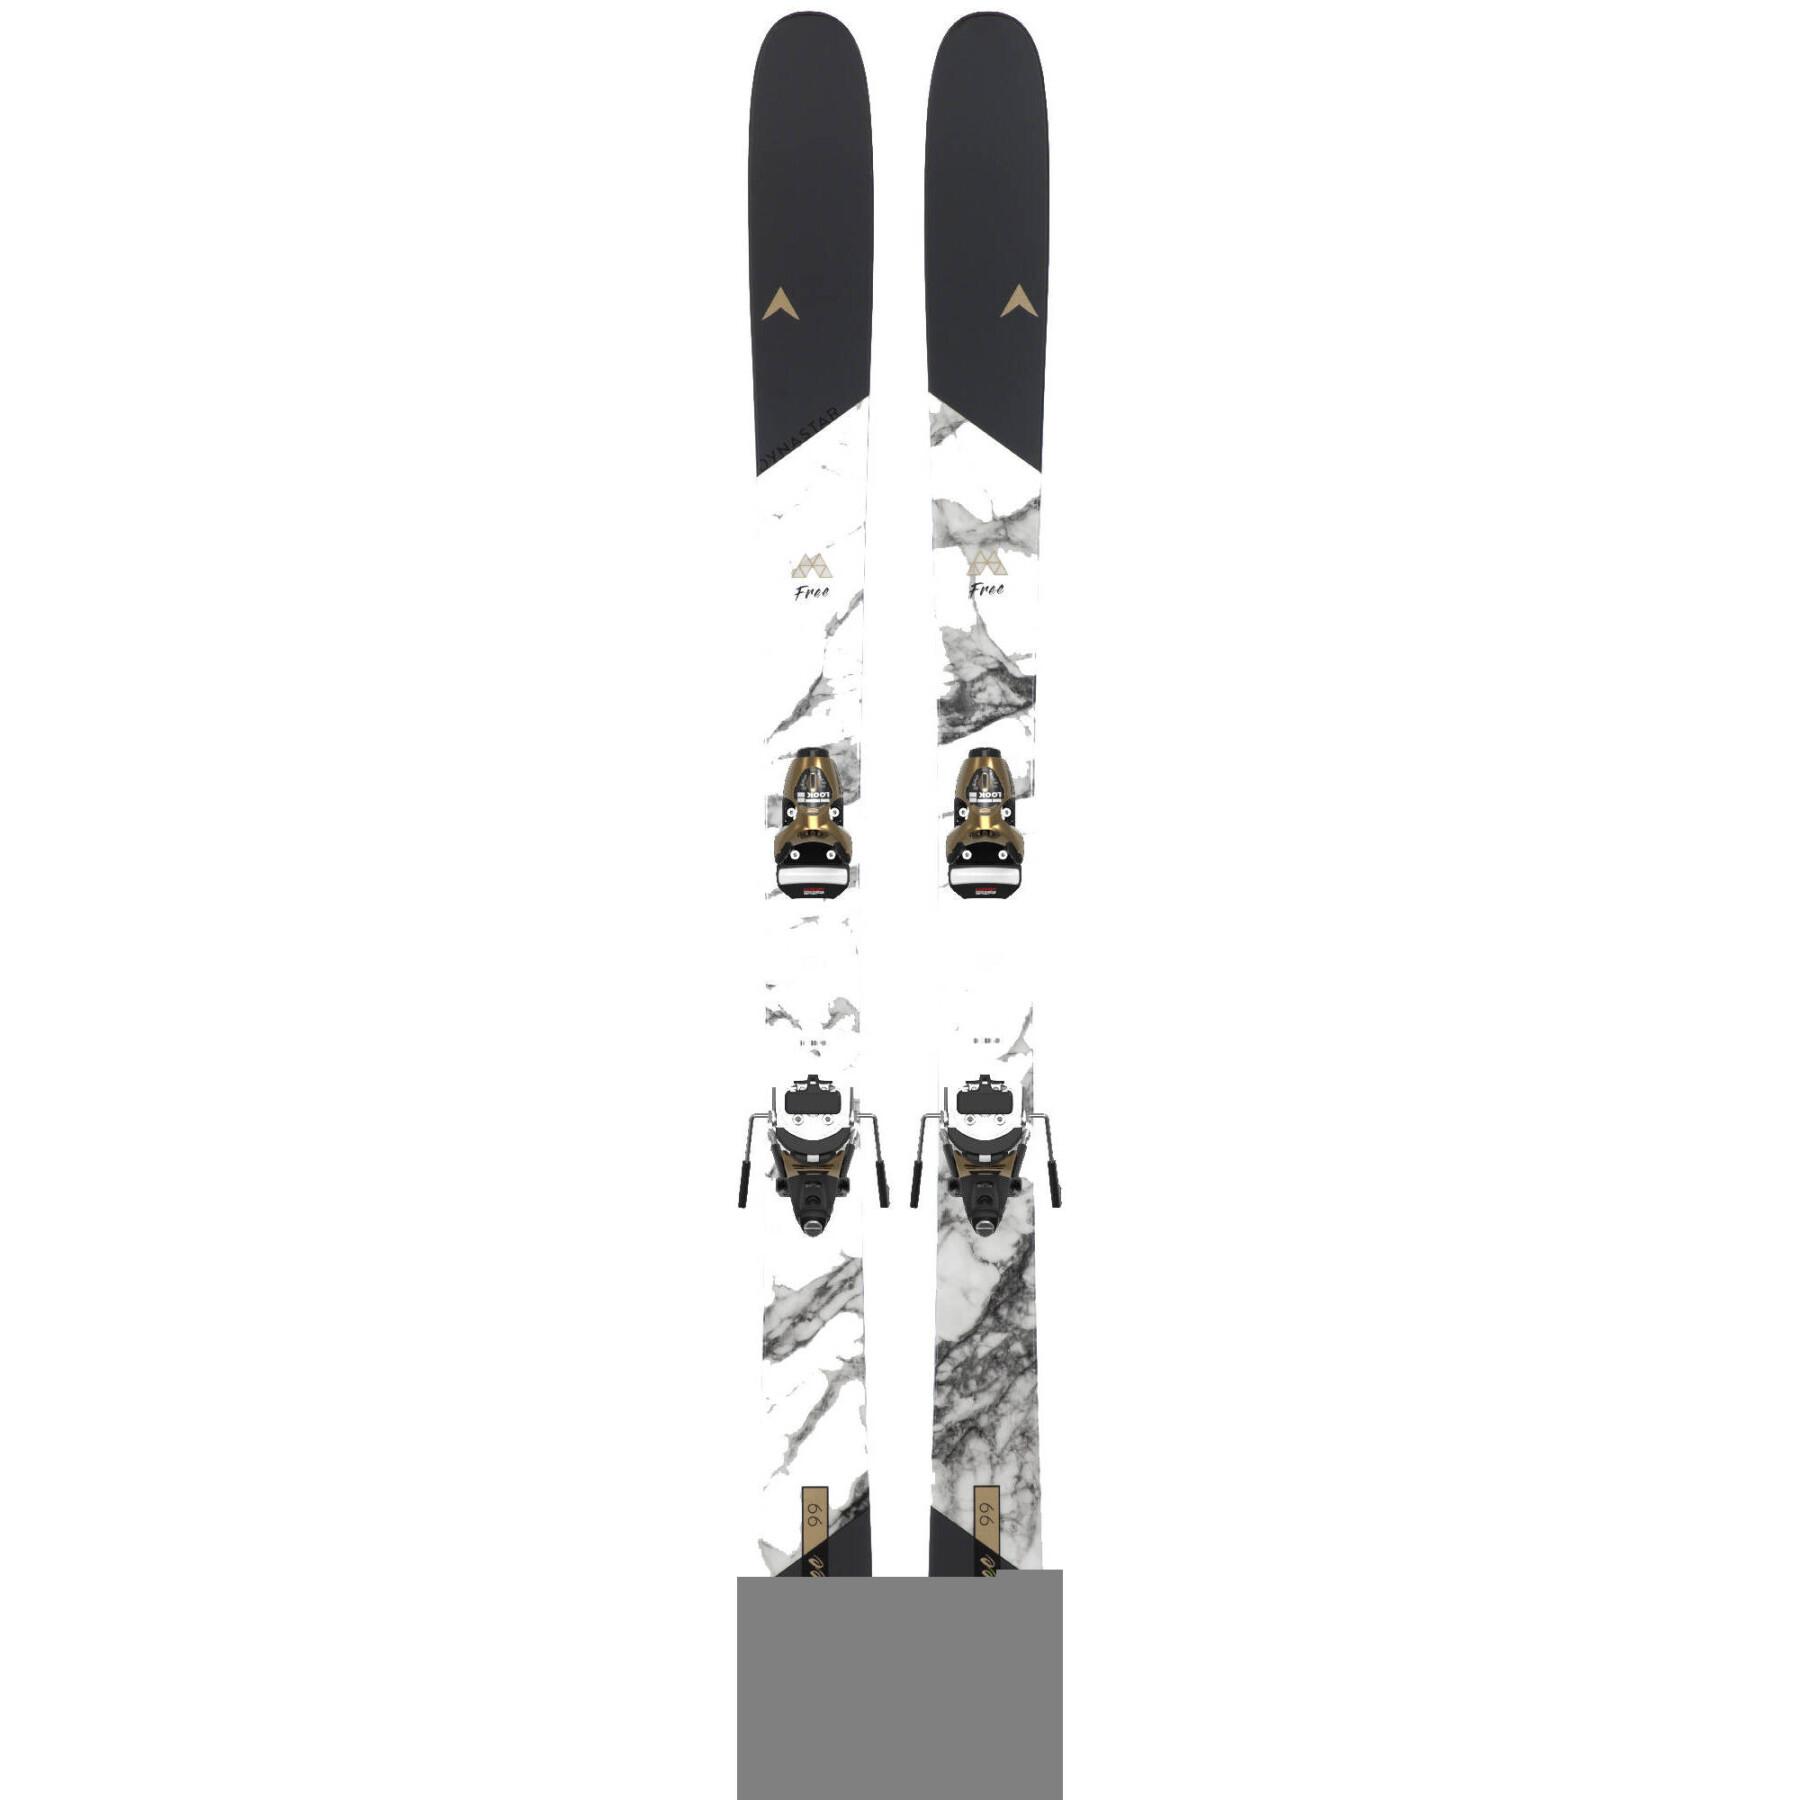 Ski zonder binding Dynastar M-Free 99 Open